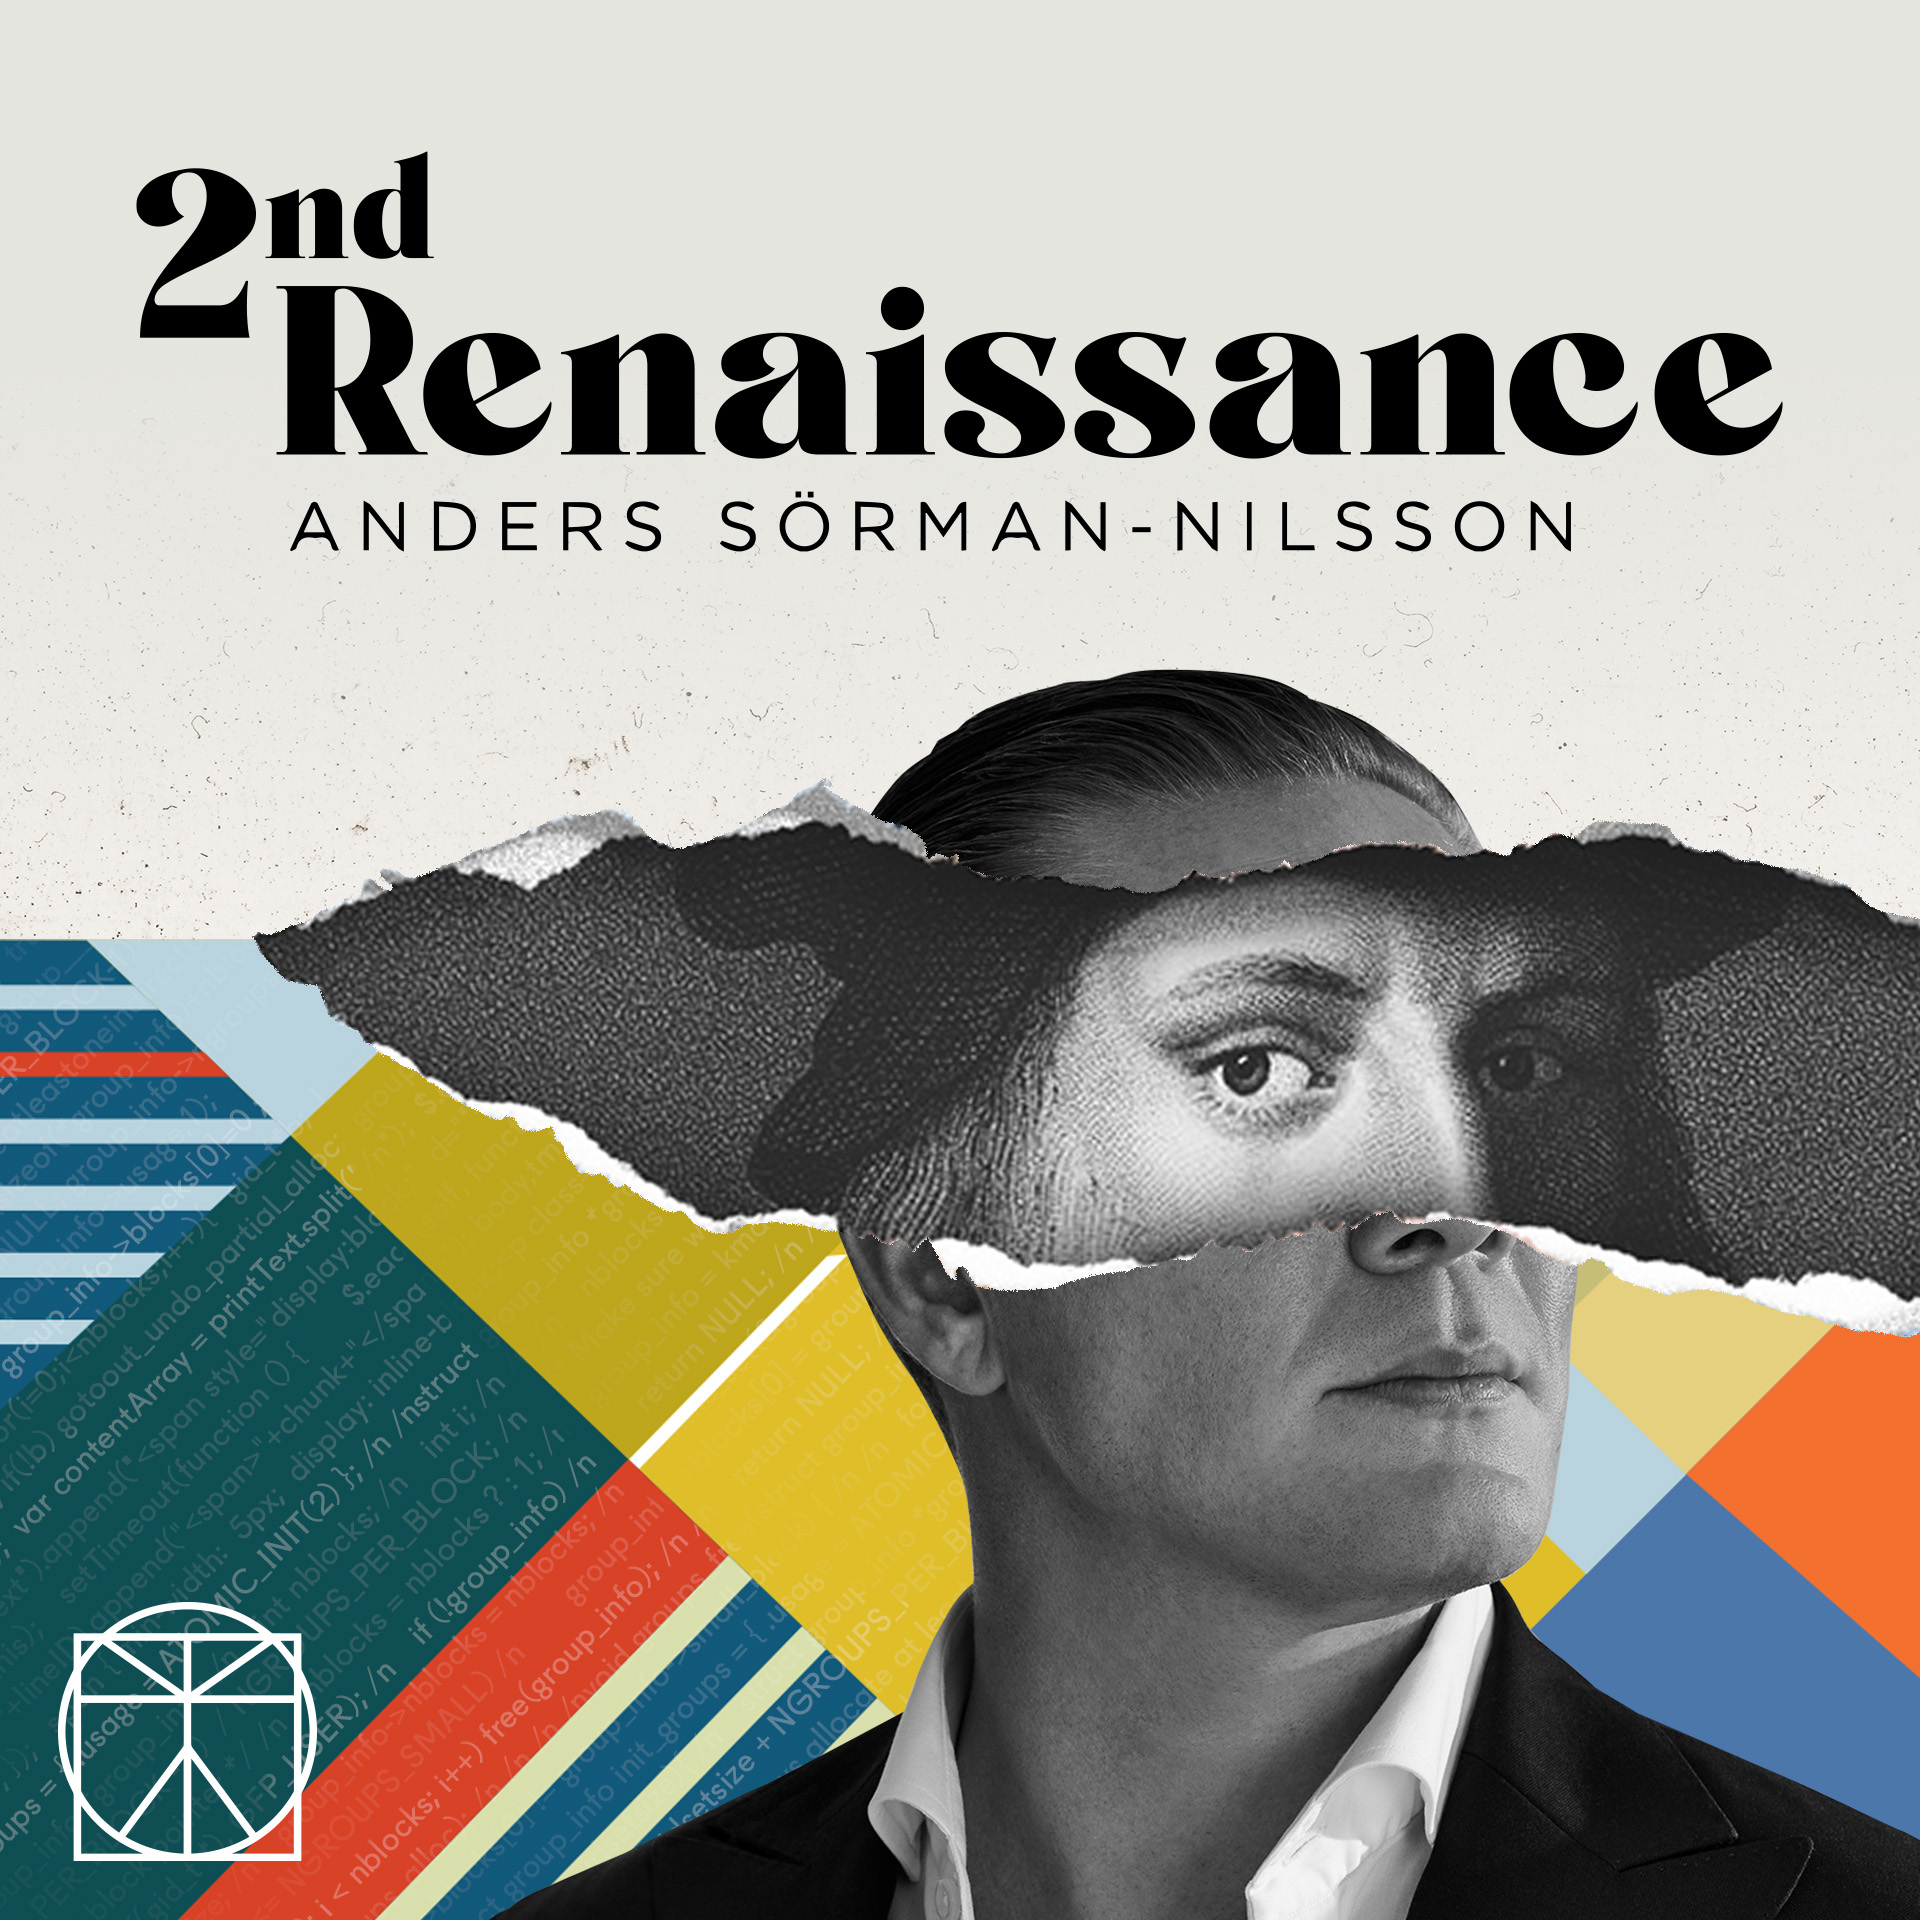 2nd Renaissance with Anders Sörman-Nilsson